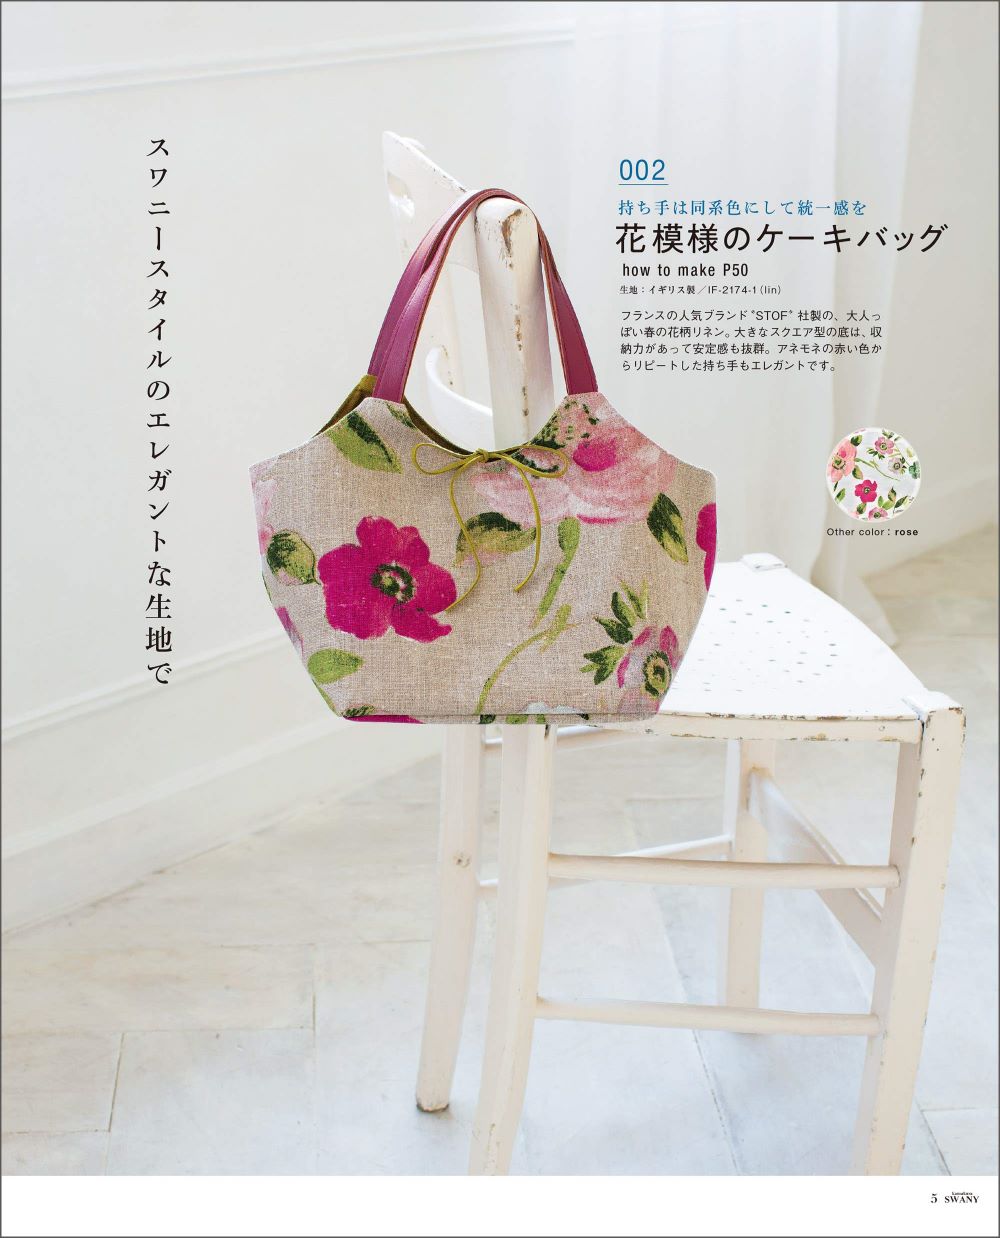 Kamakura Suwanee adult style bag (from the basics)